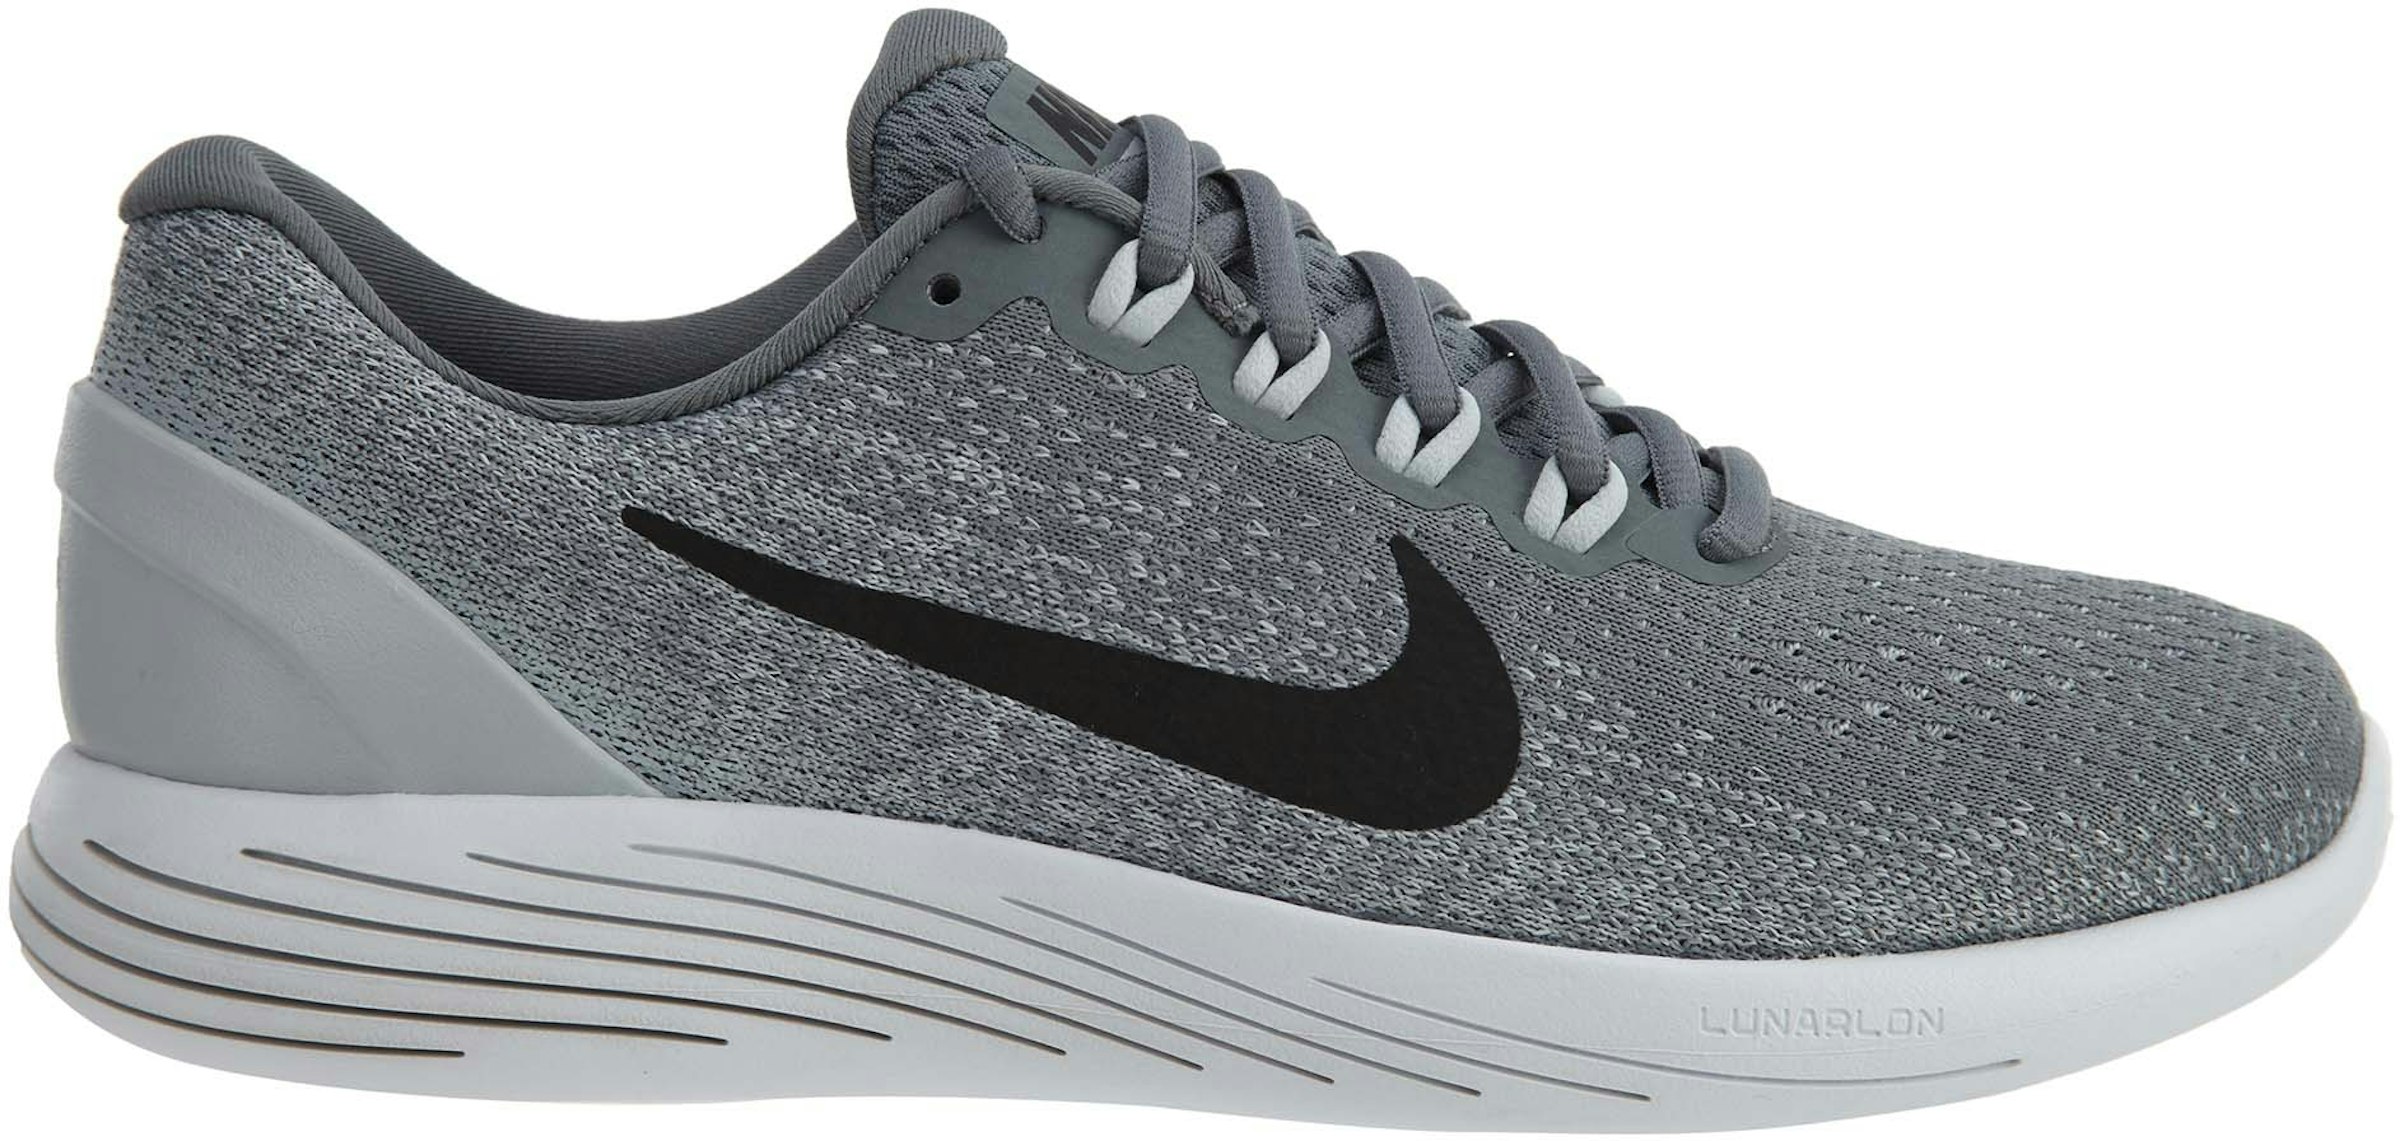 Nike 9 Cool Grey Black-Pure Platinum (Women's) - 904716-002 - US